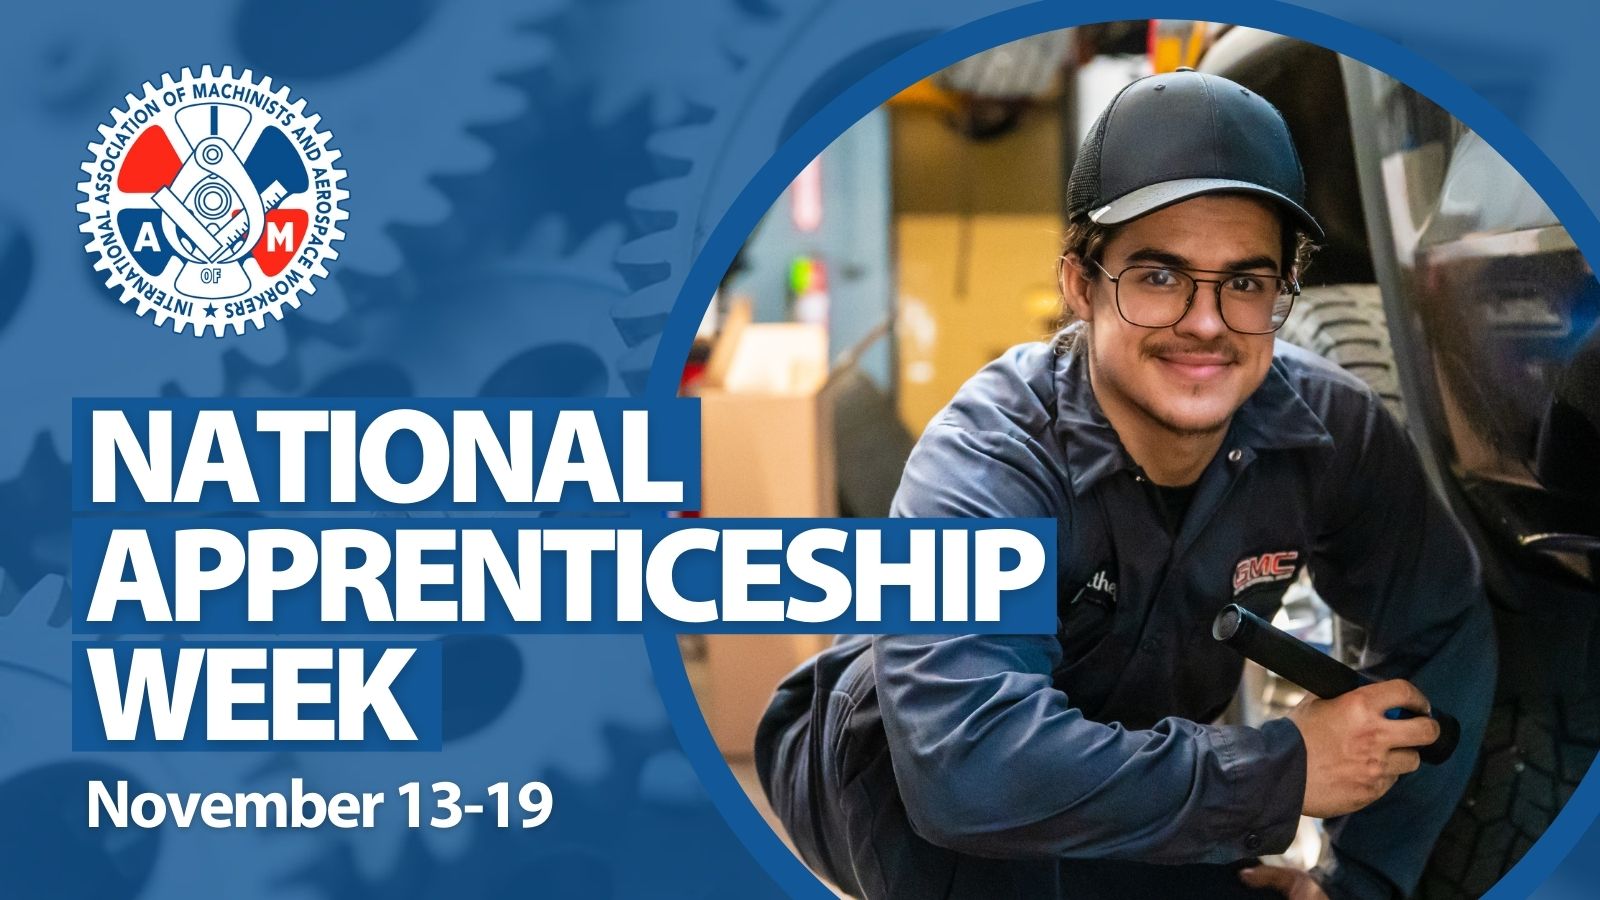 IAM Celebrates National Apprenticeship Week